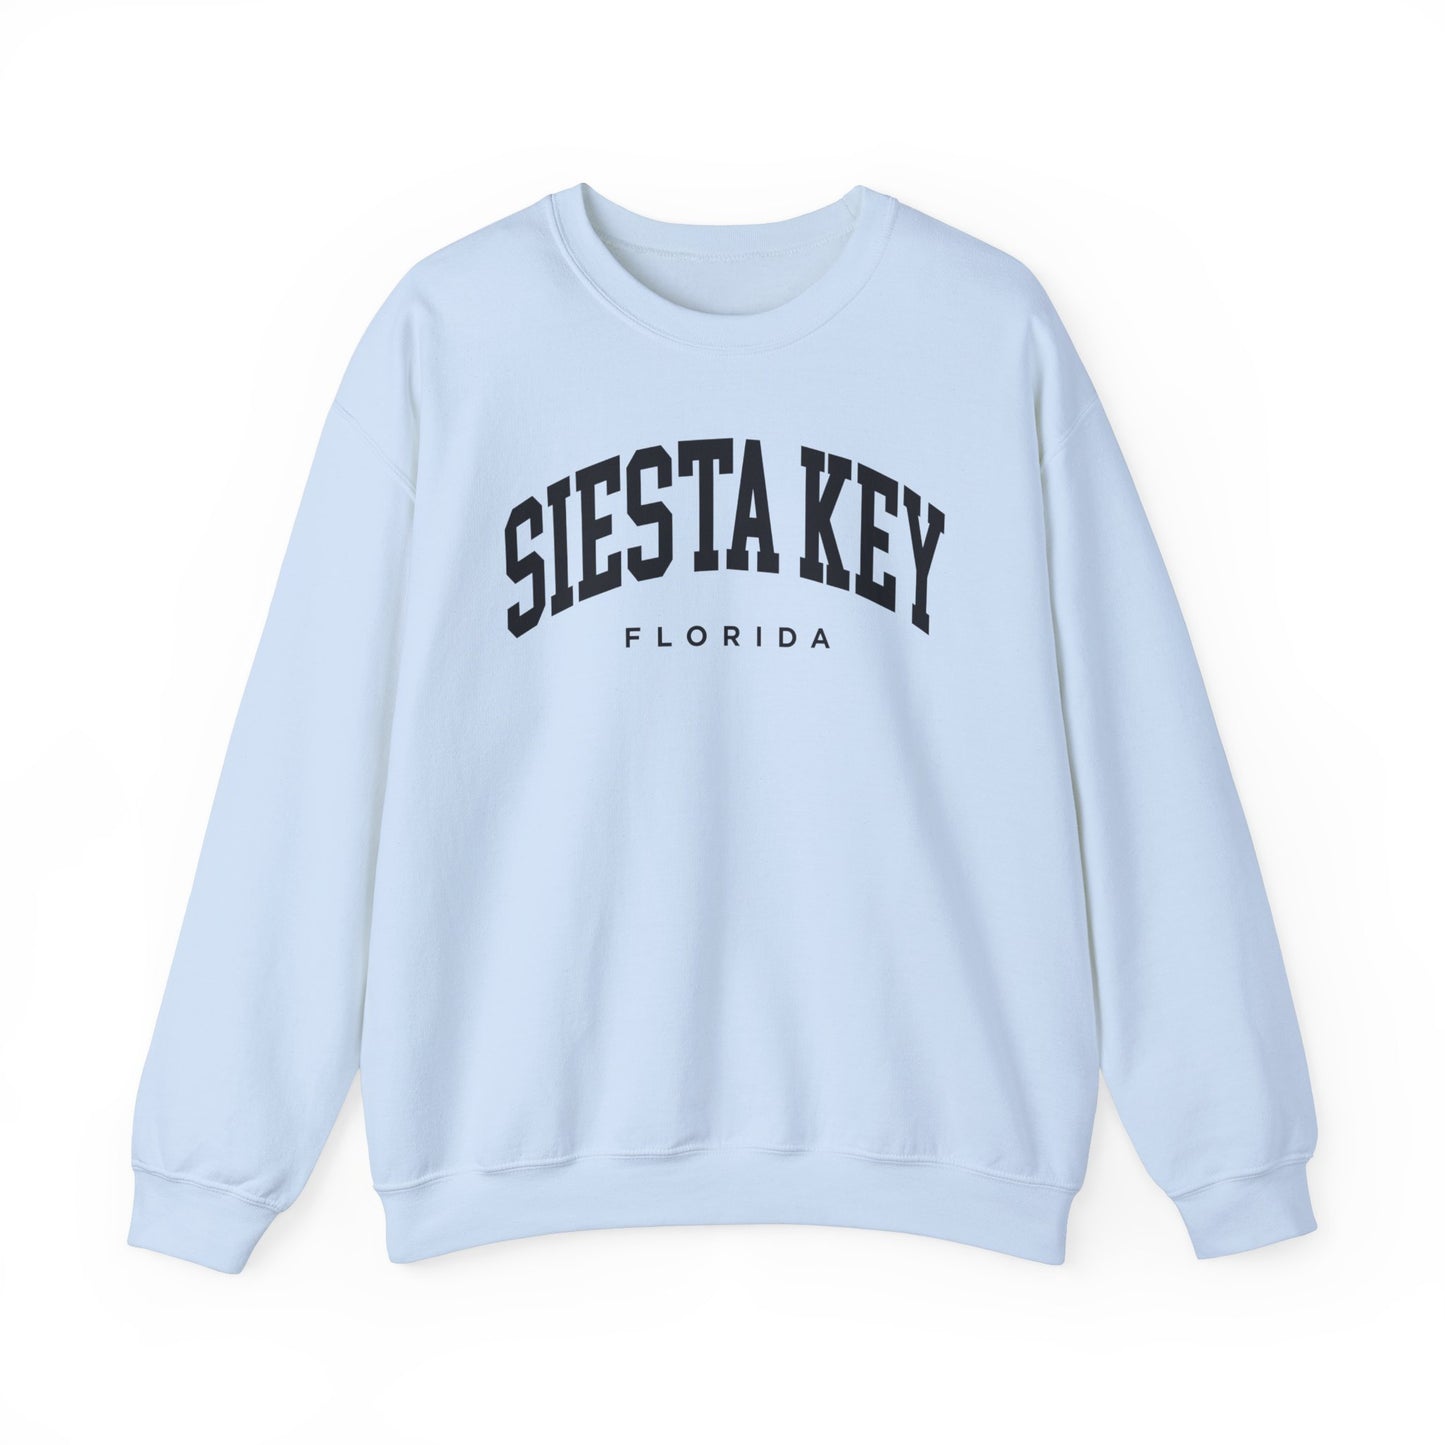 Siesta Key Florida Sweatshirt